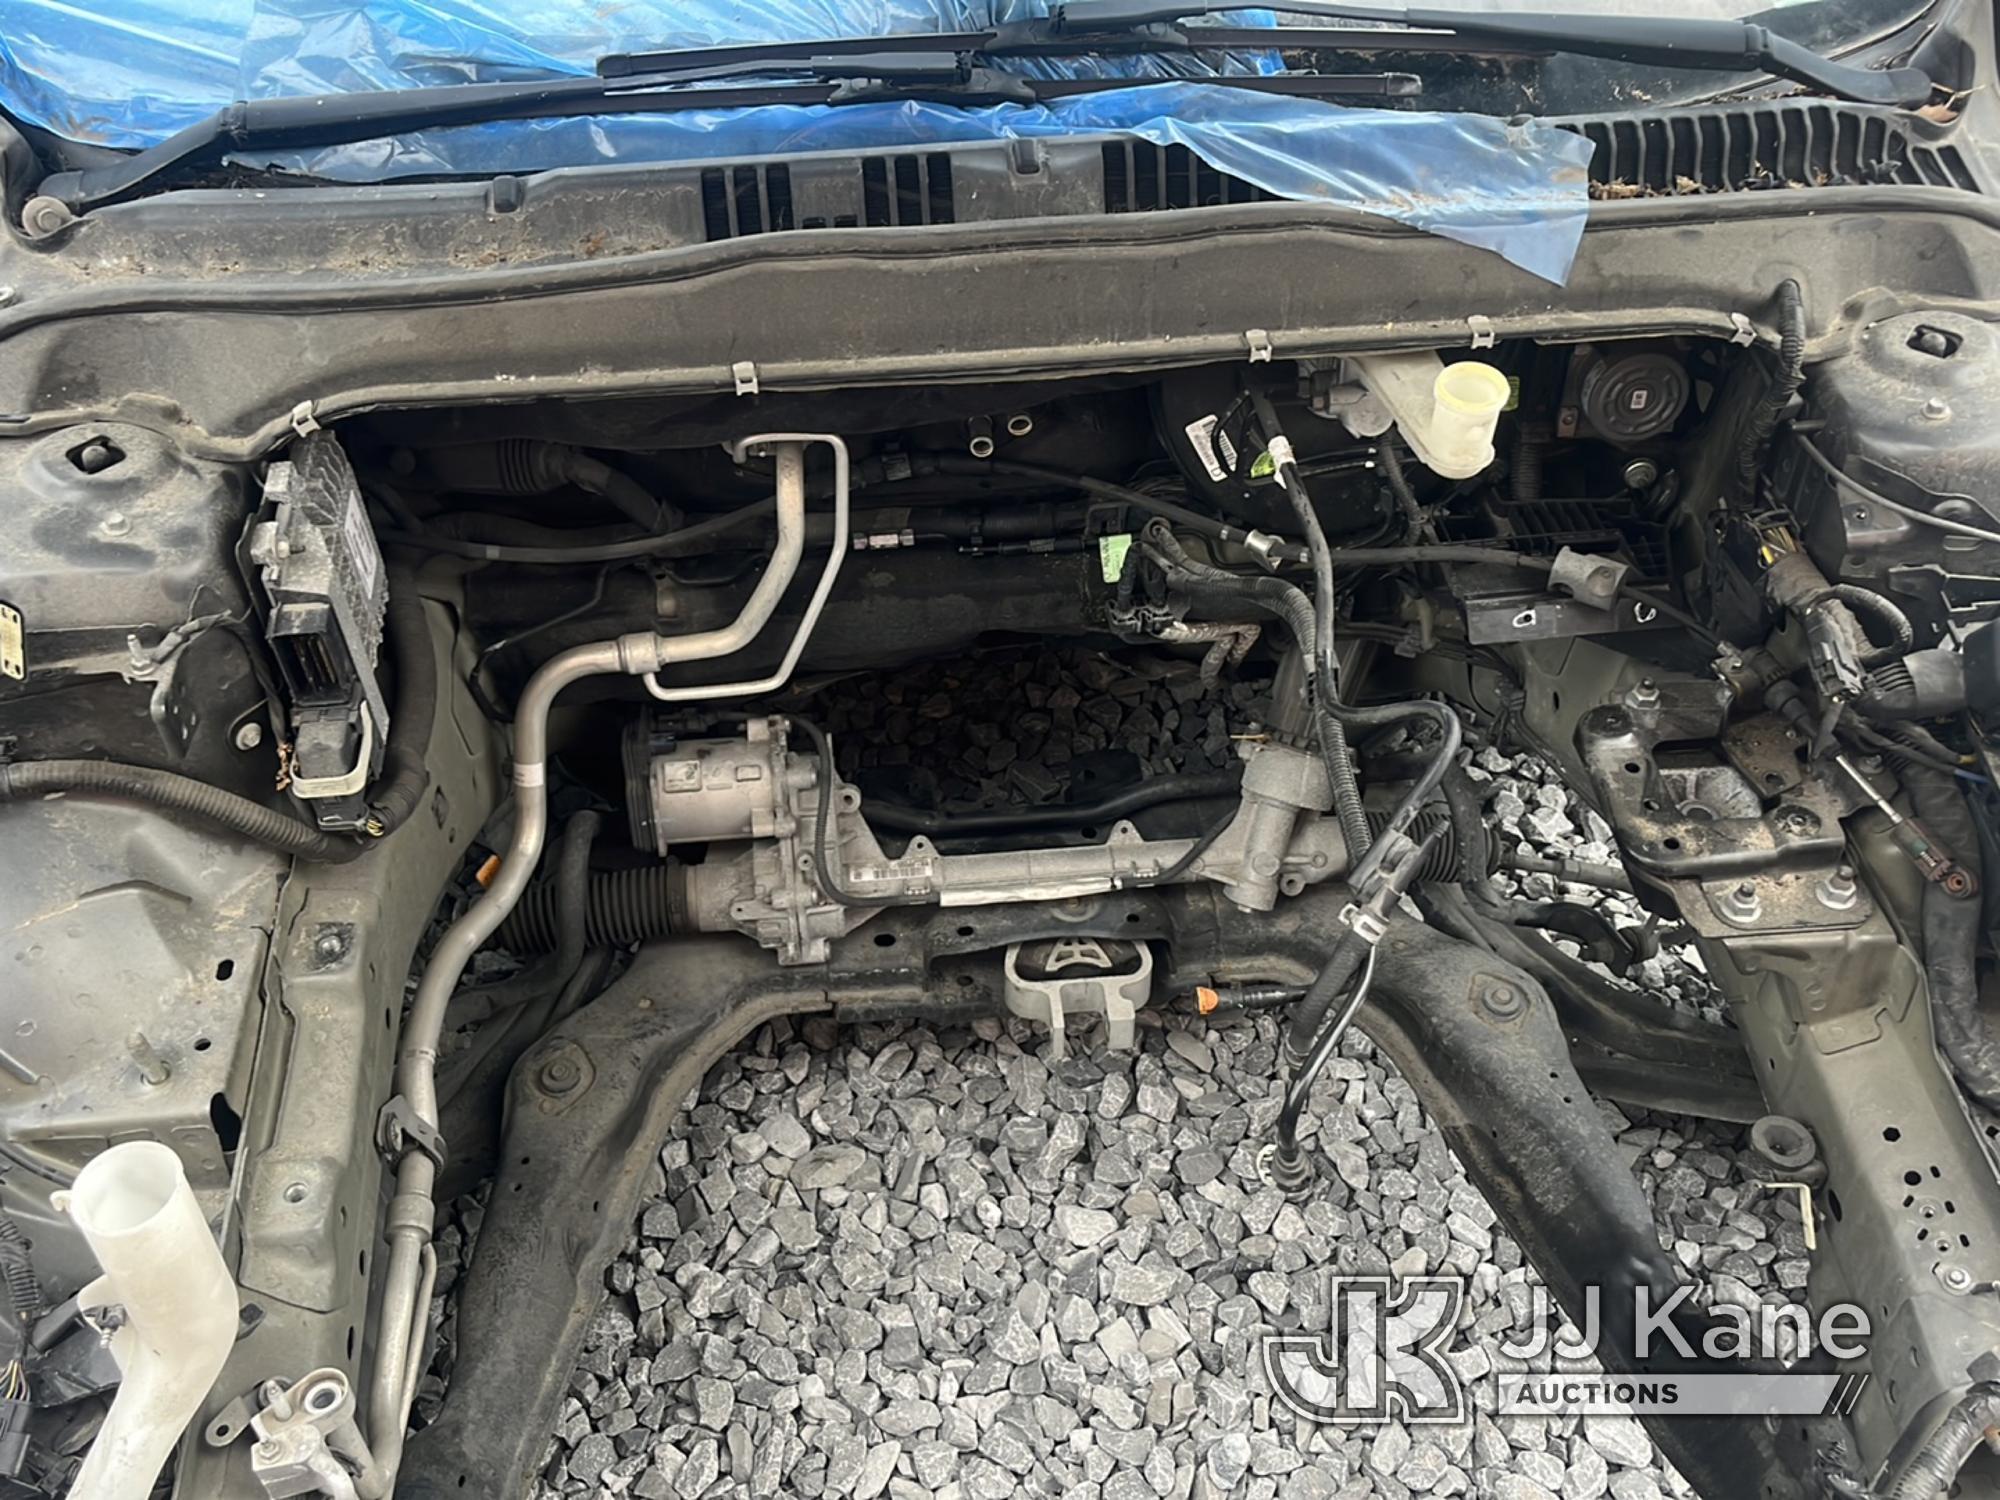 (Covington, LA) 2017 Ford Fusion 4-Door Sedan Not running, condition unknown) (wrecked